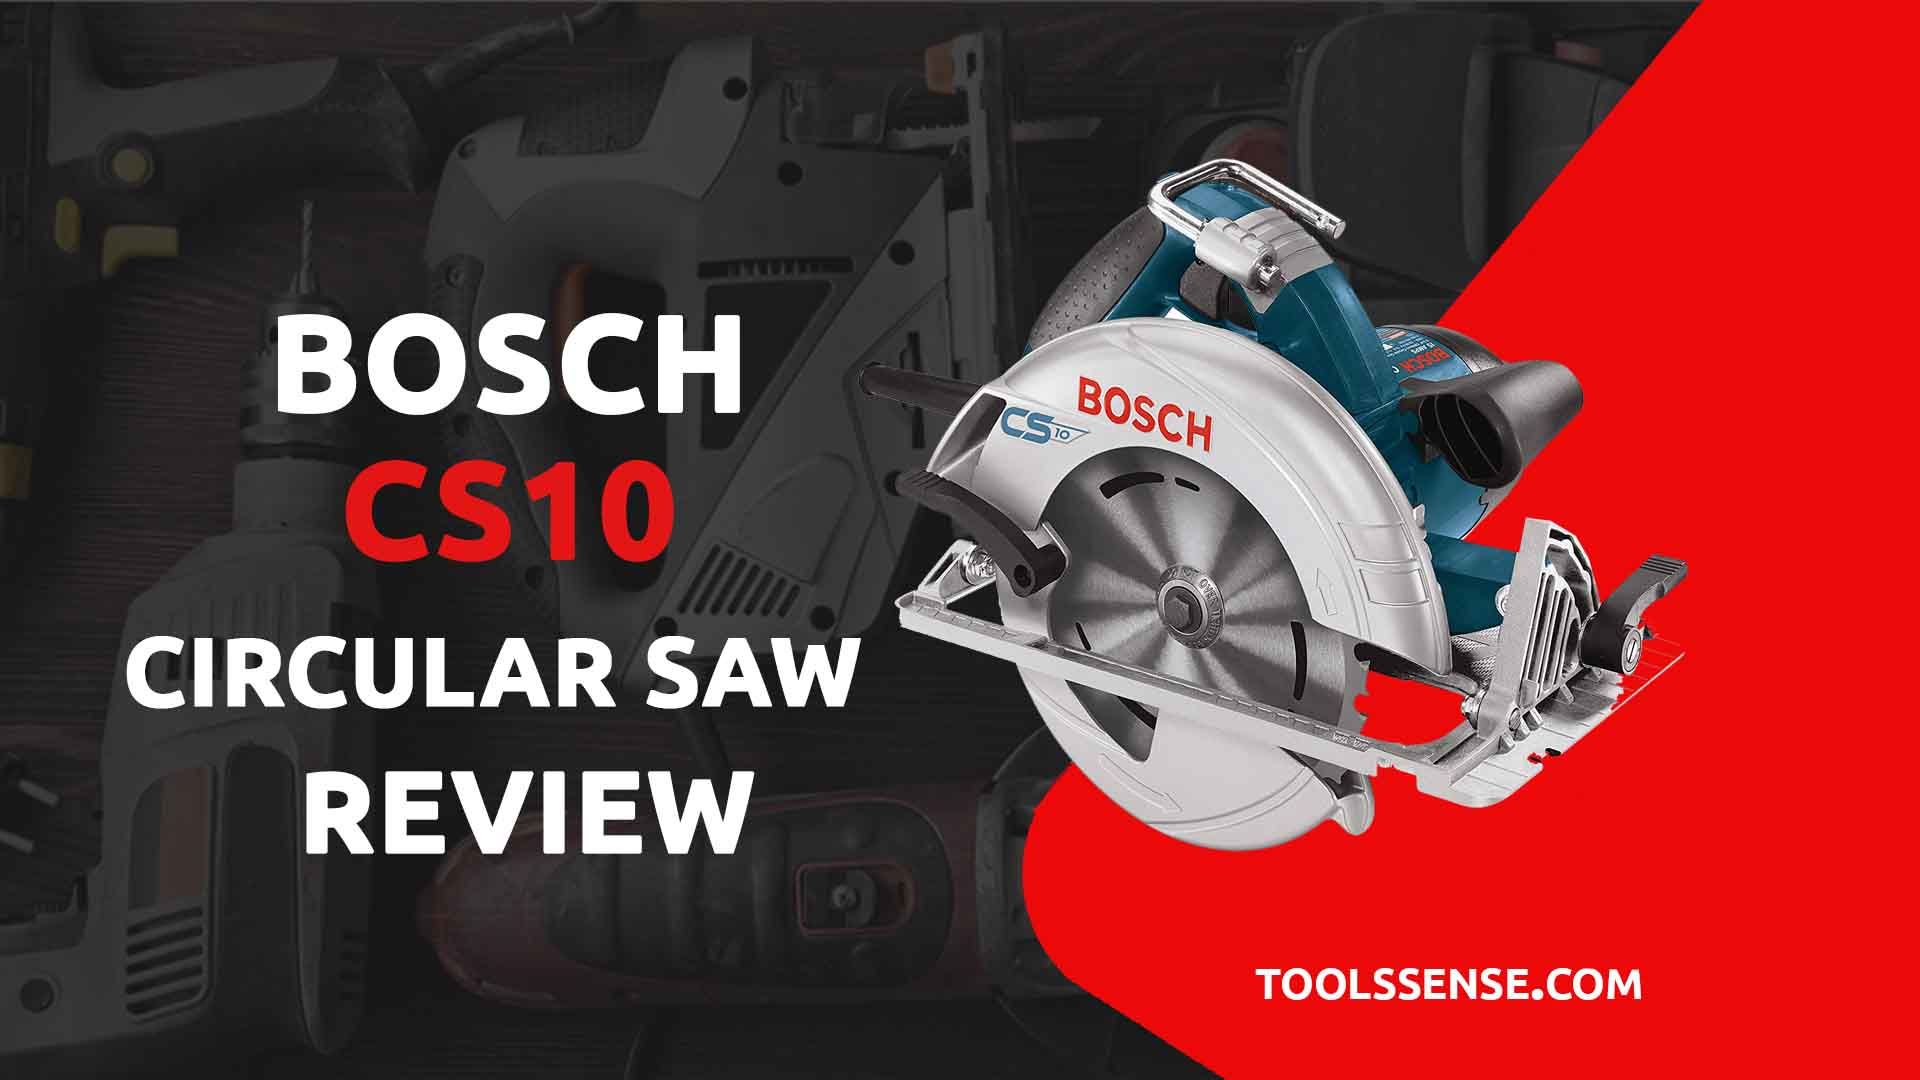 Bosch CS10 Review Circular Saw